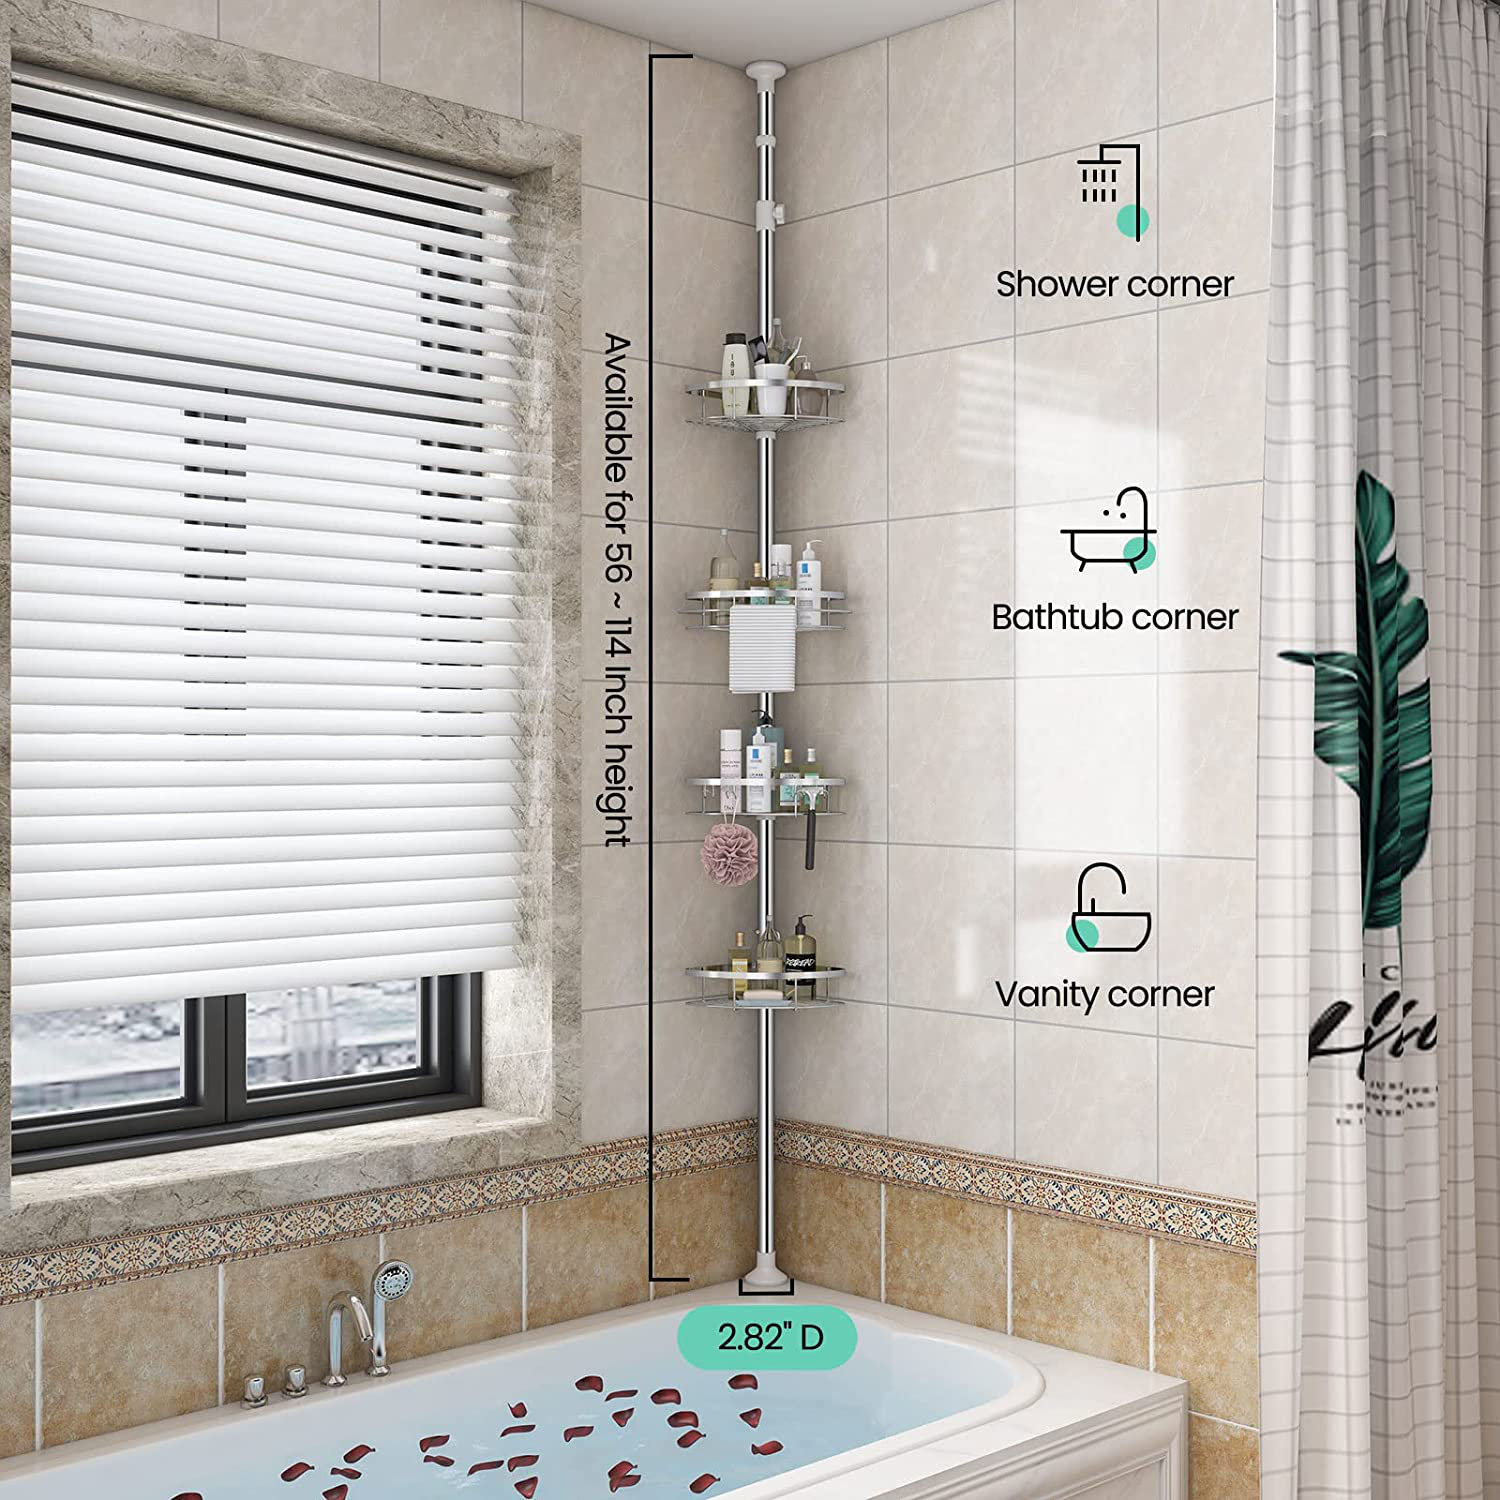 Corner Shower Caddy Tension Pole: Stainless Steel Rustproof Inside Shower  Organizer with 4 Tier Adjustable Shelves for Bathroom Bathtub Tub Shampoo